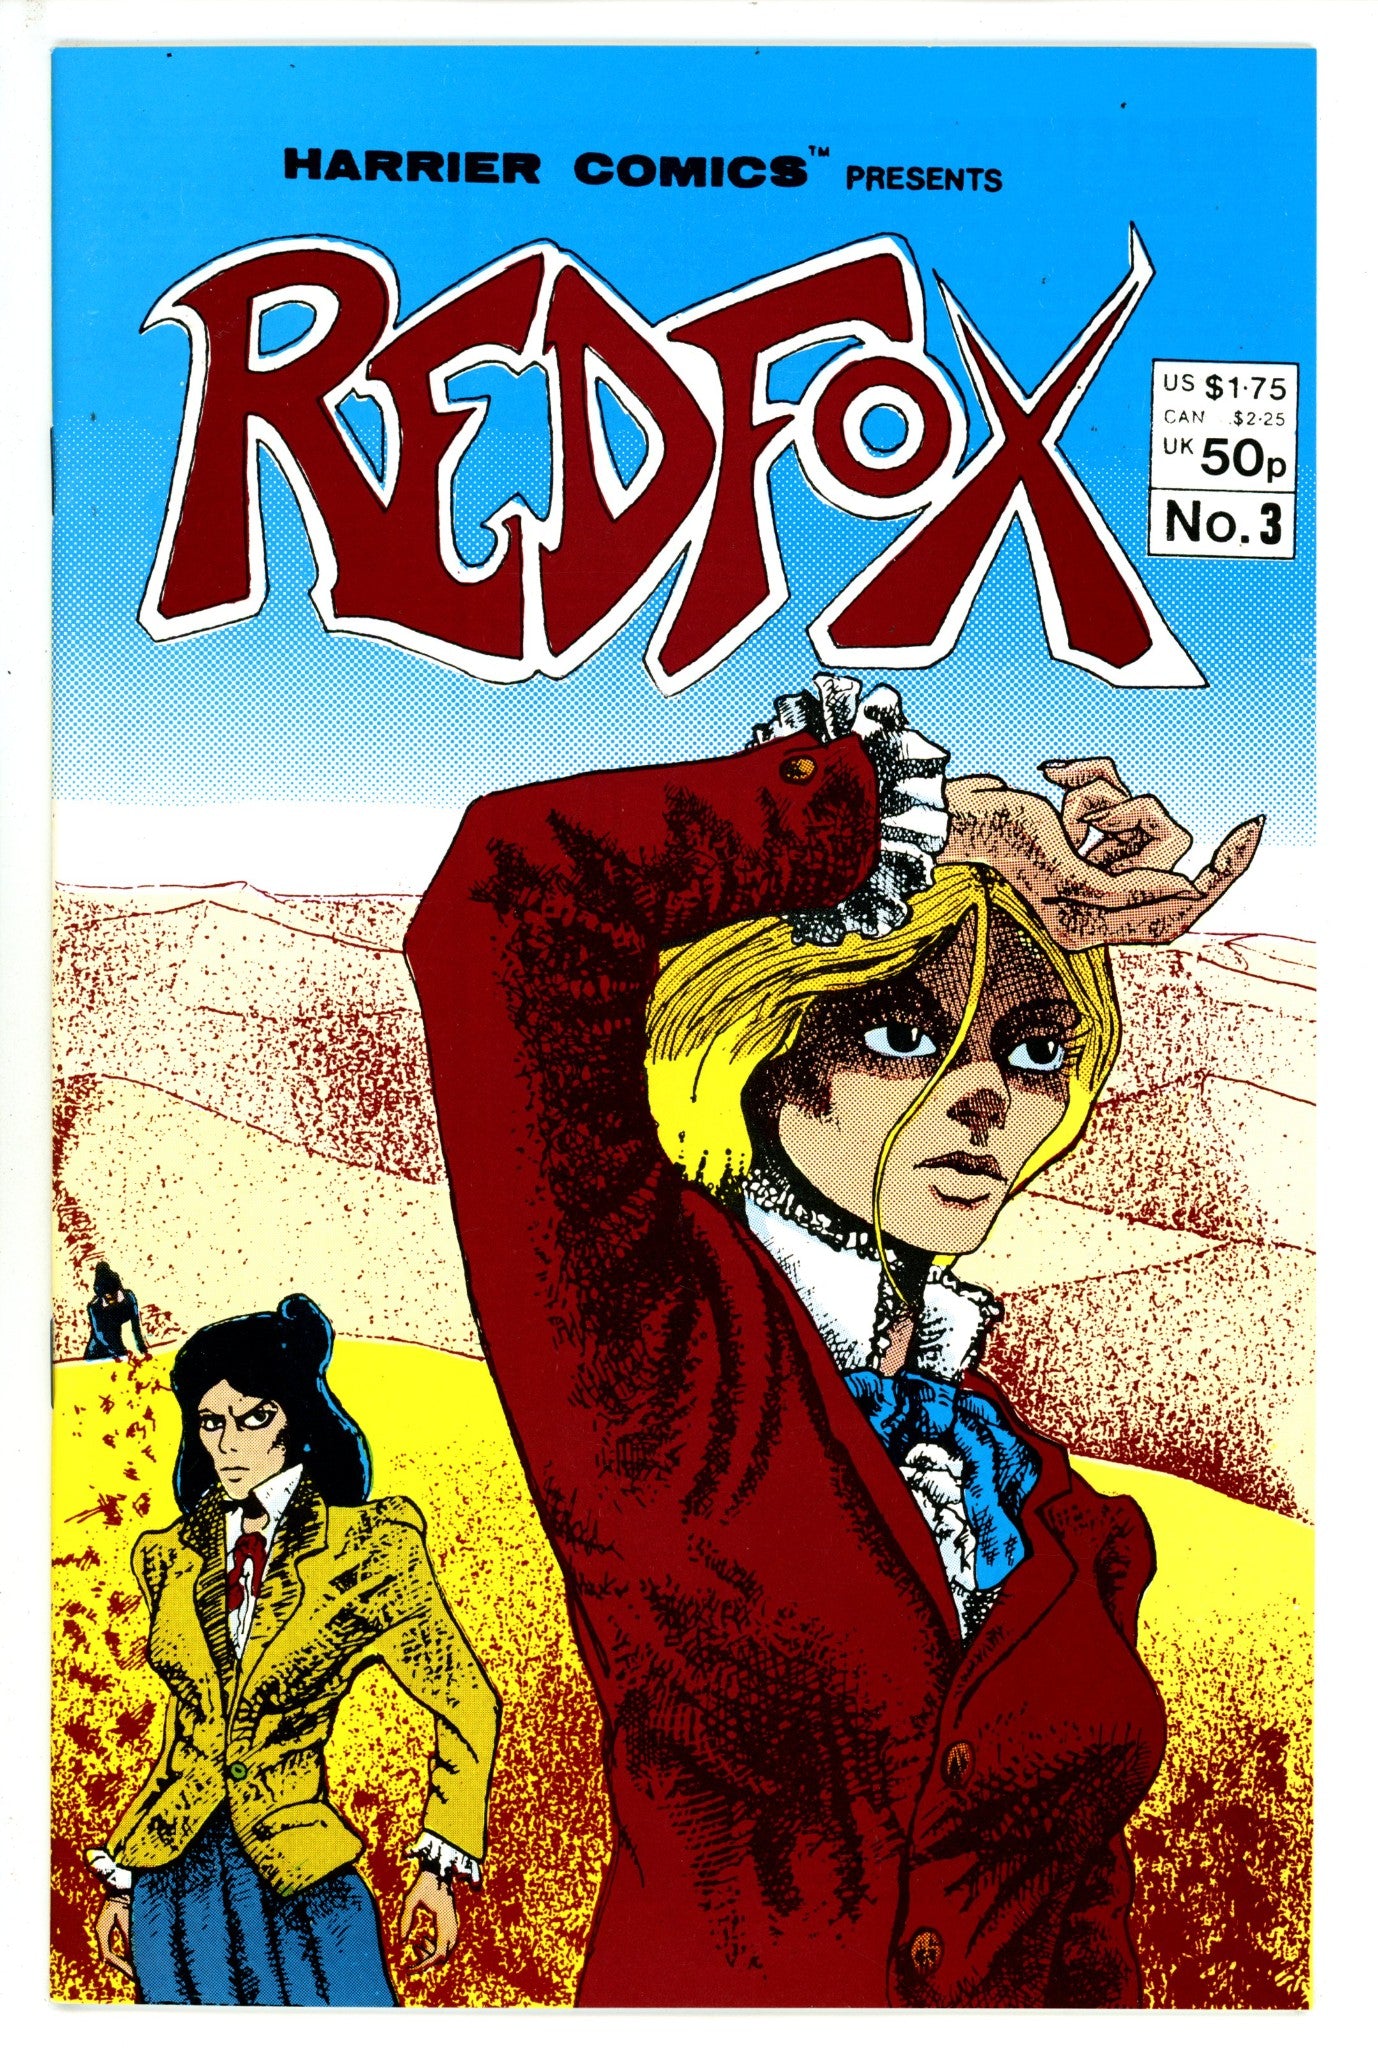 Redfox 3 (1986)